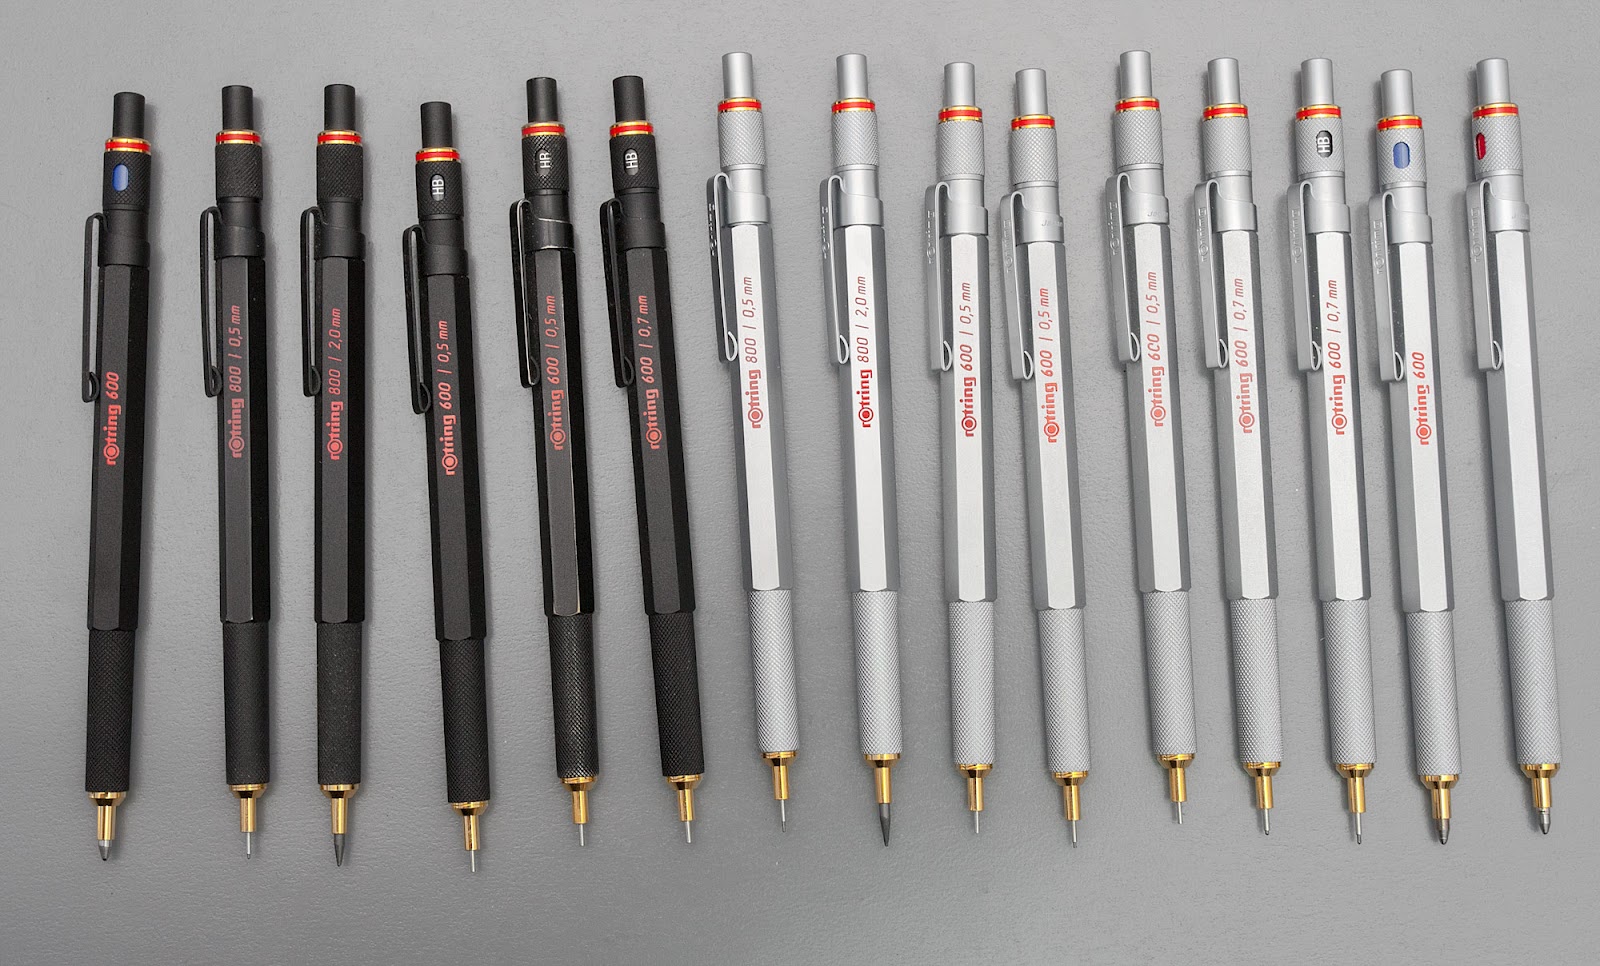 Platinum Mechanical Pencil Pro Use 07 Msd-1000 0.7mm for sale online